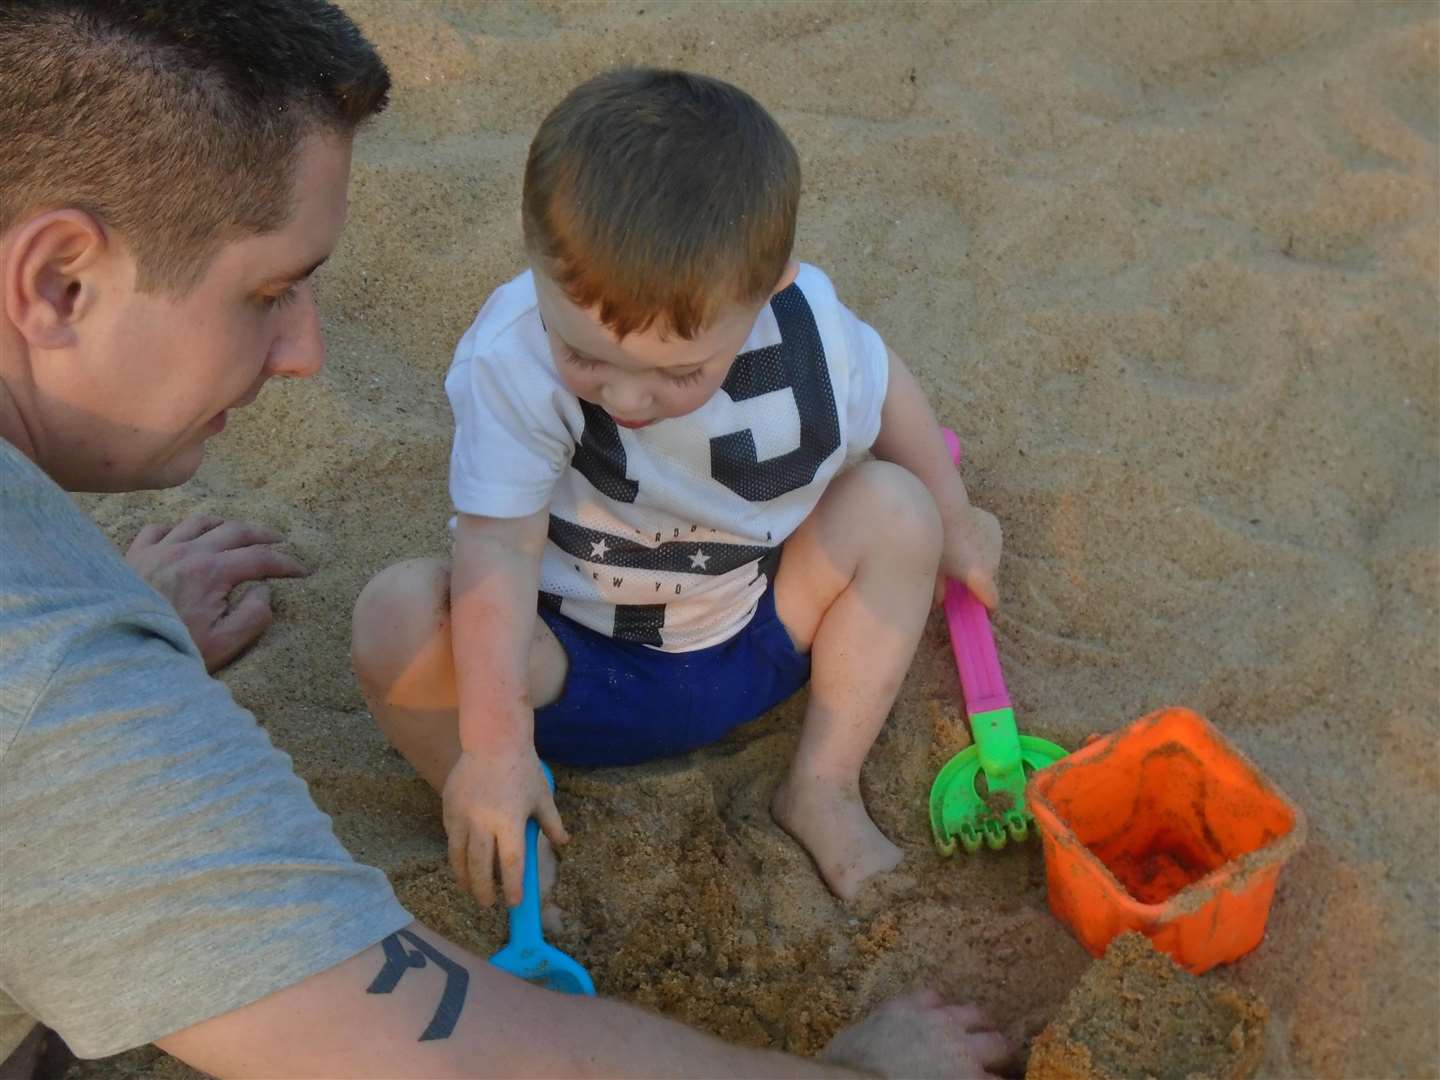 Jack makes sandcastles with dad Daniel Lee Scott